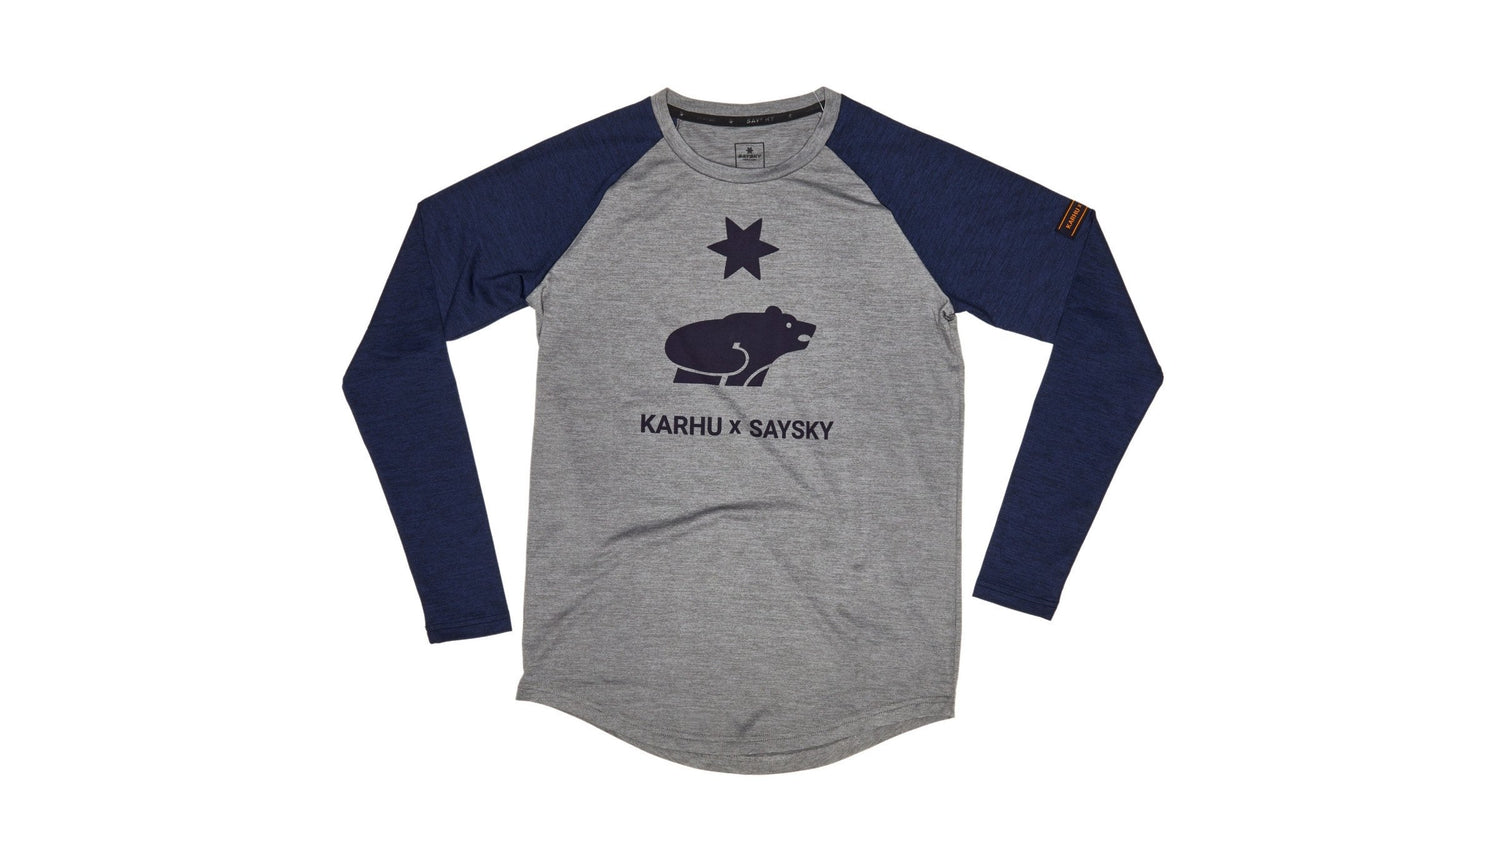 Karhu x Saysky men's running long-sleeved shirt, recycled material